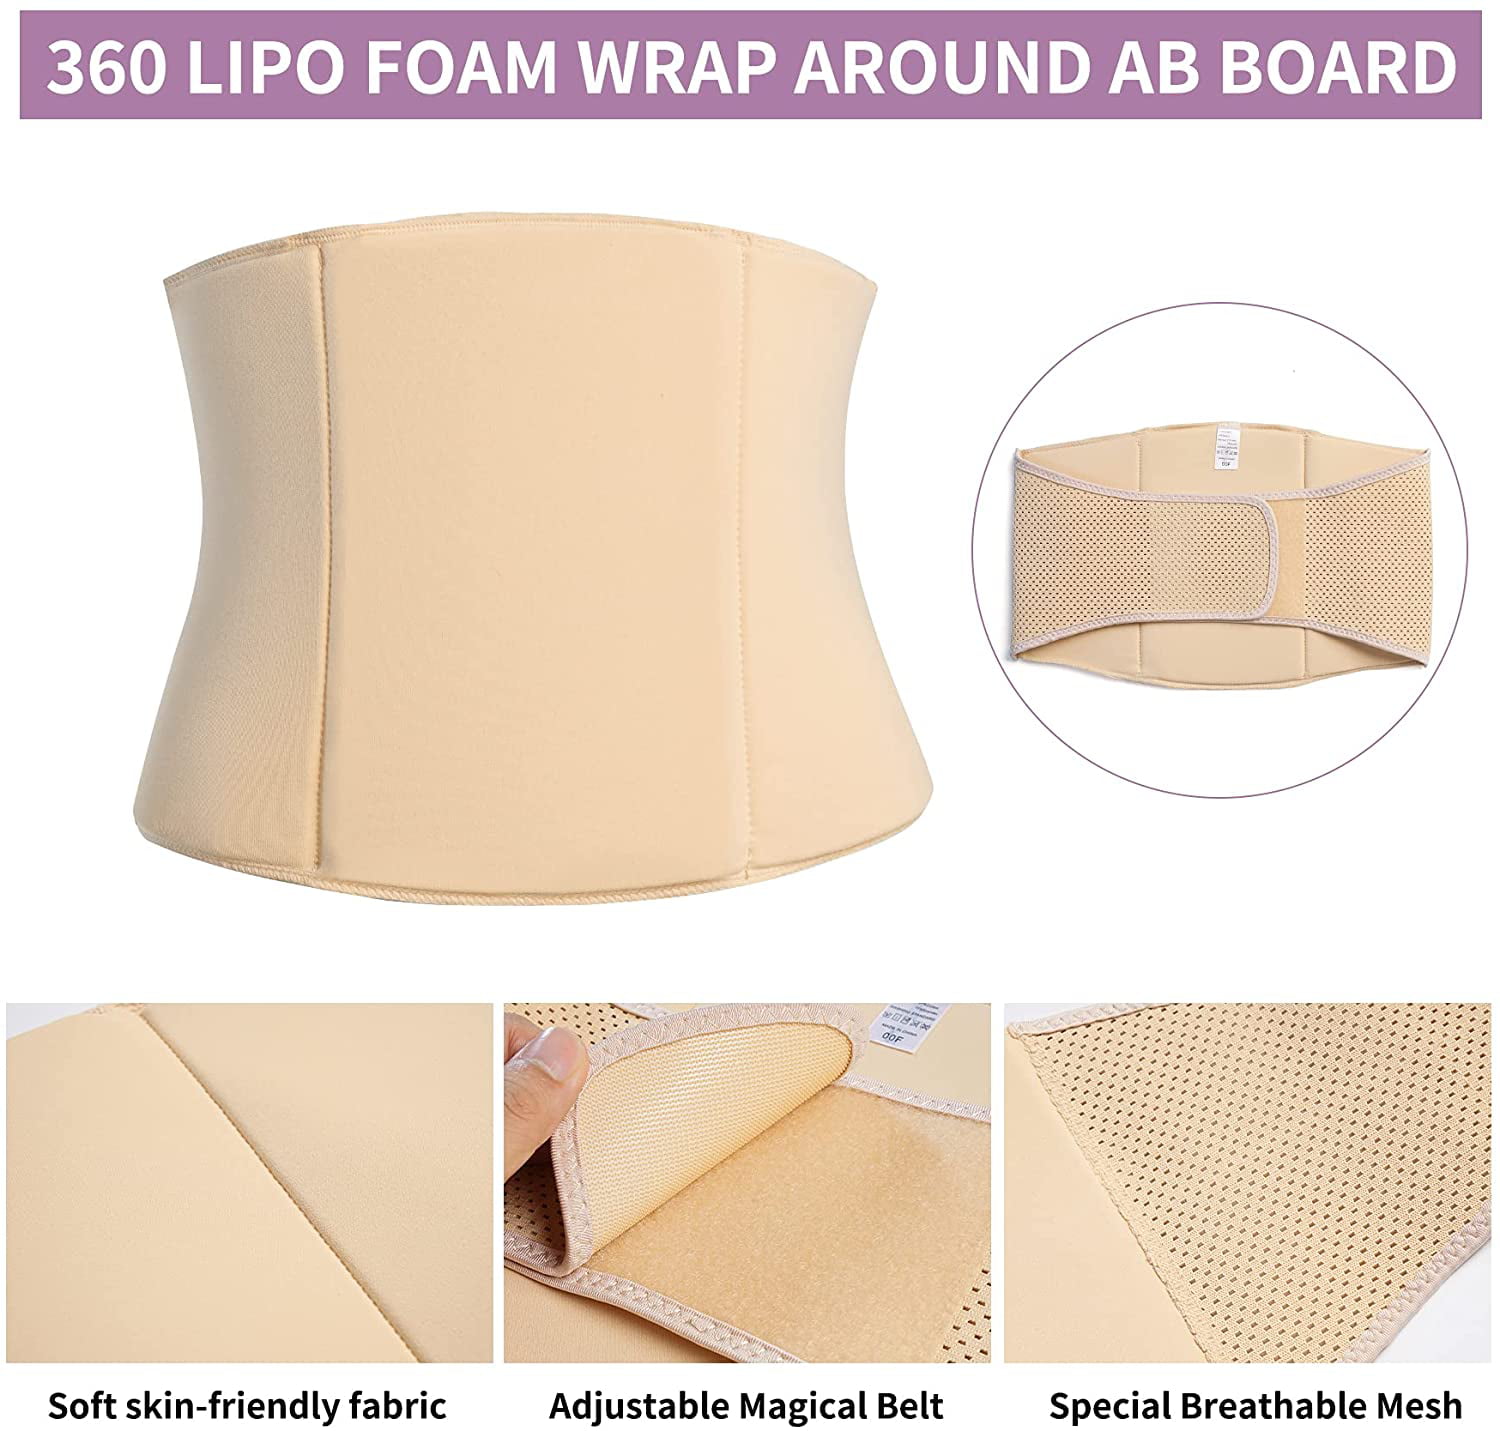 Abdominal Board 360 Lipo Foams Post Surgery Foam Uganda